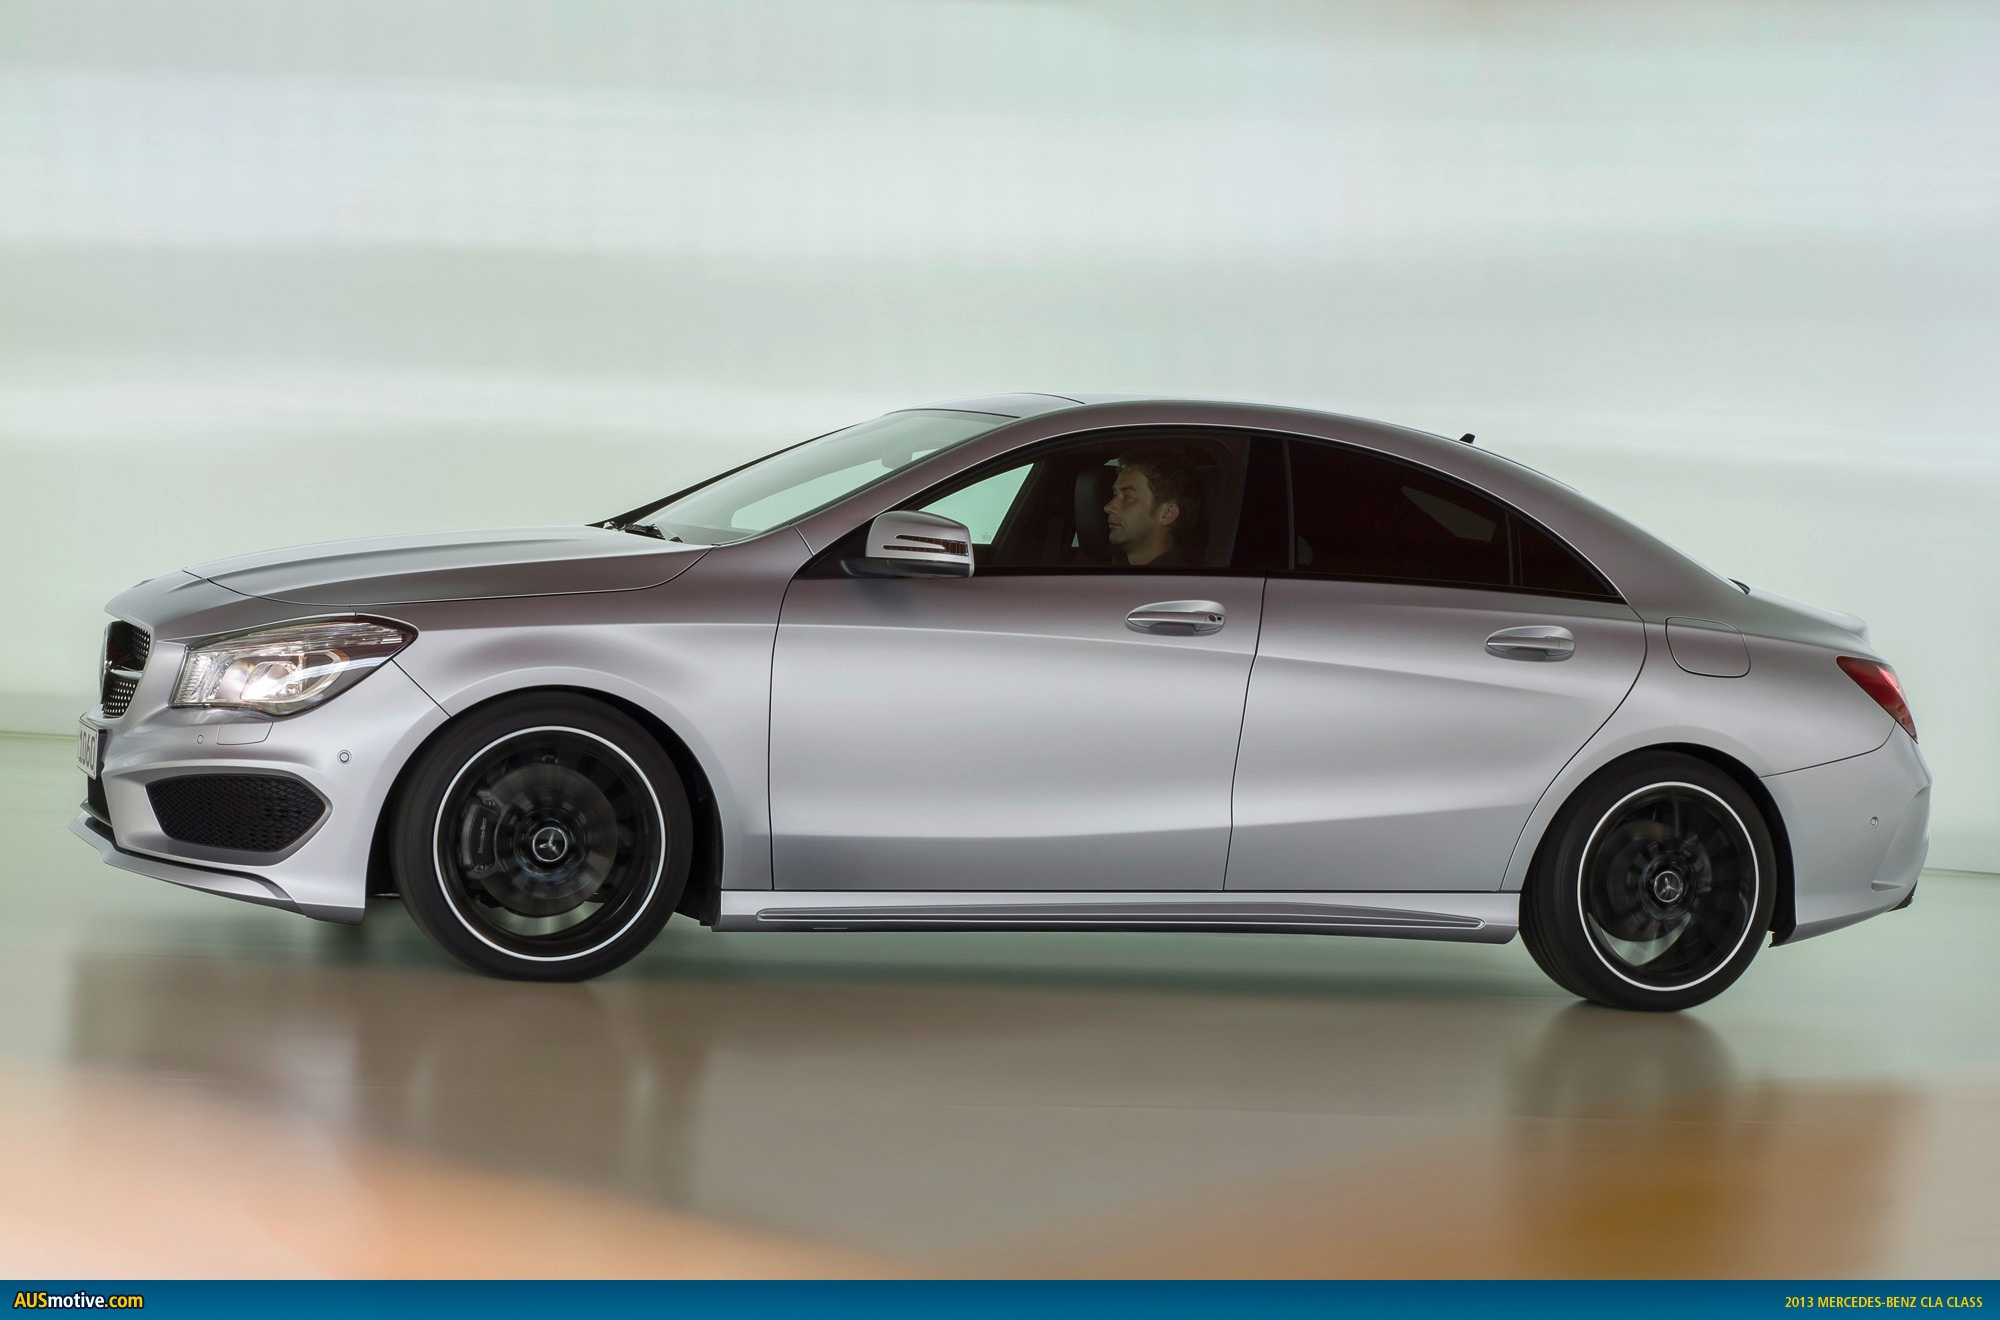 AUSmotive.com » Detroit 2013: Mercedes-Benz CLA